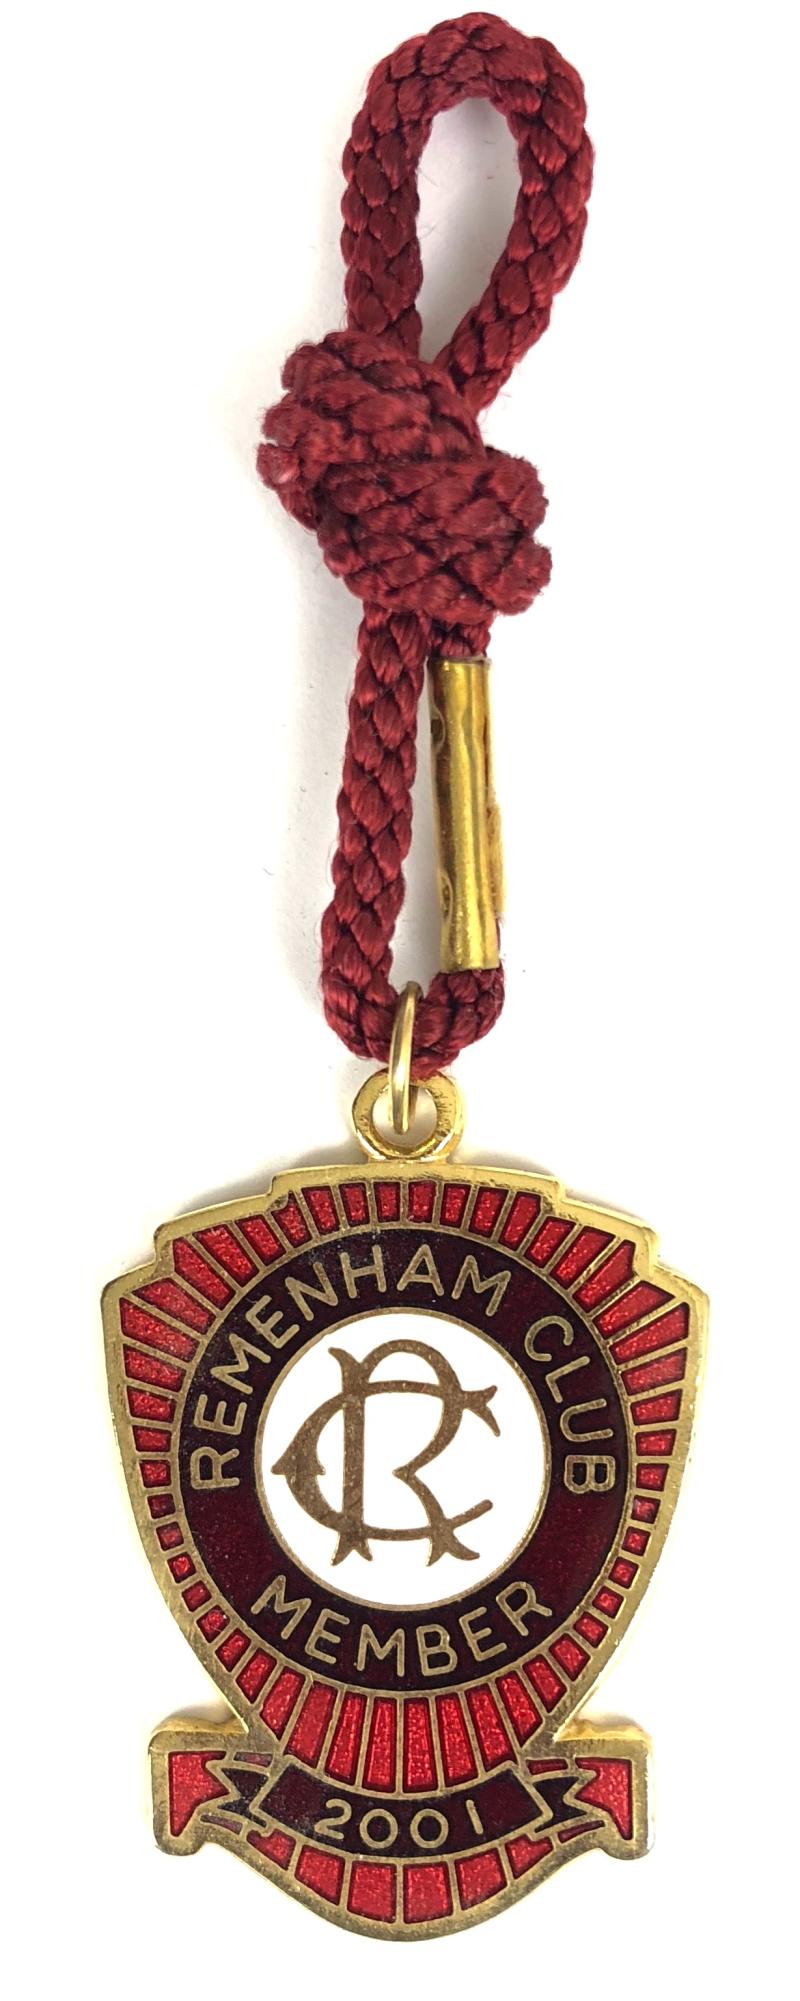 2001 Remenham Rowing Club badge Henley Royal Regatta